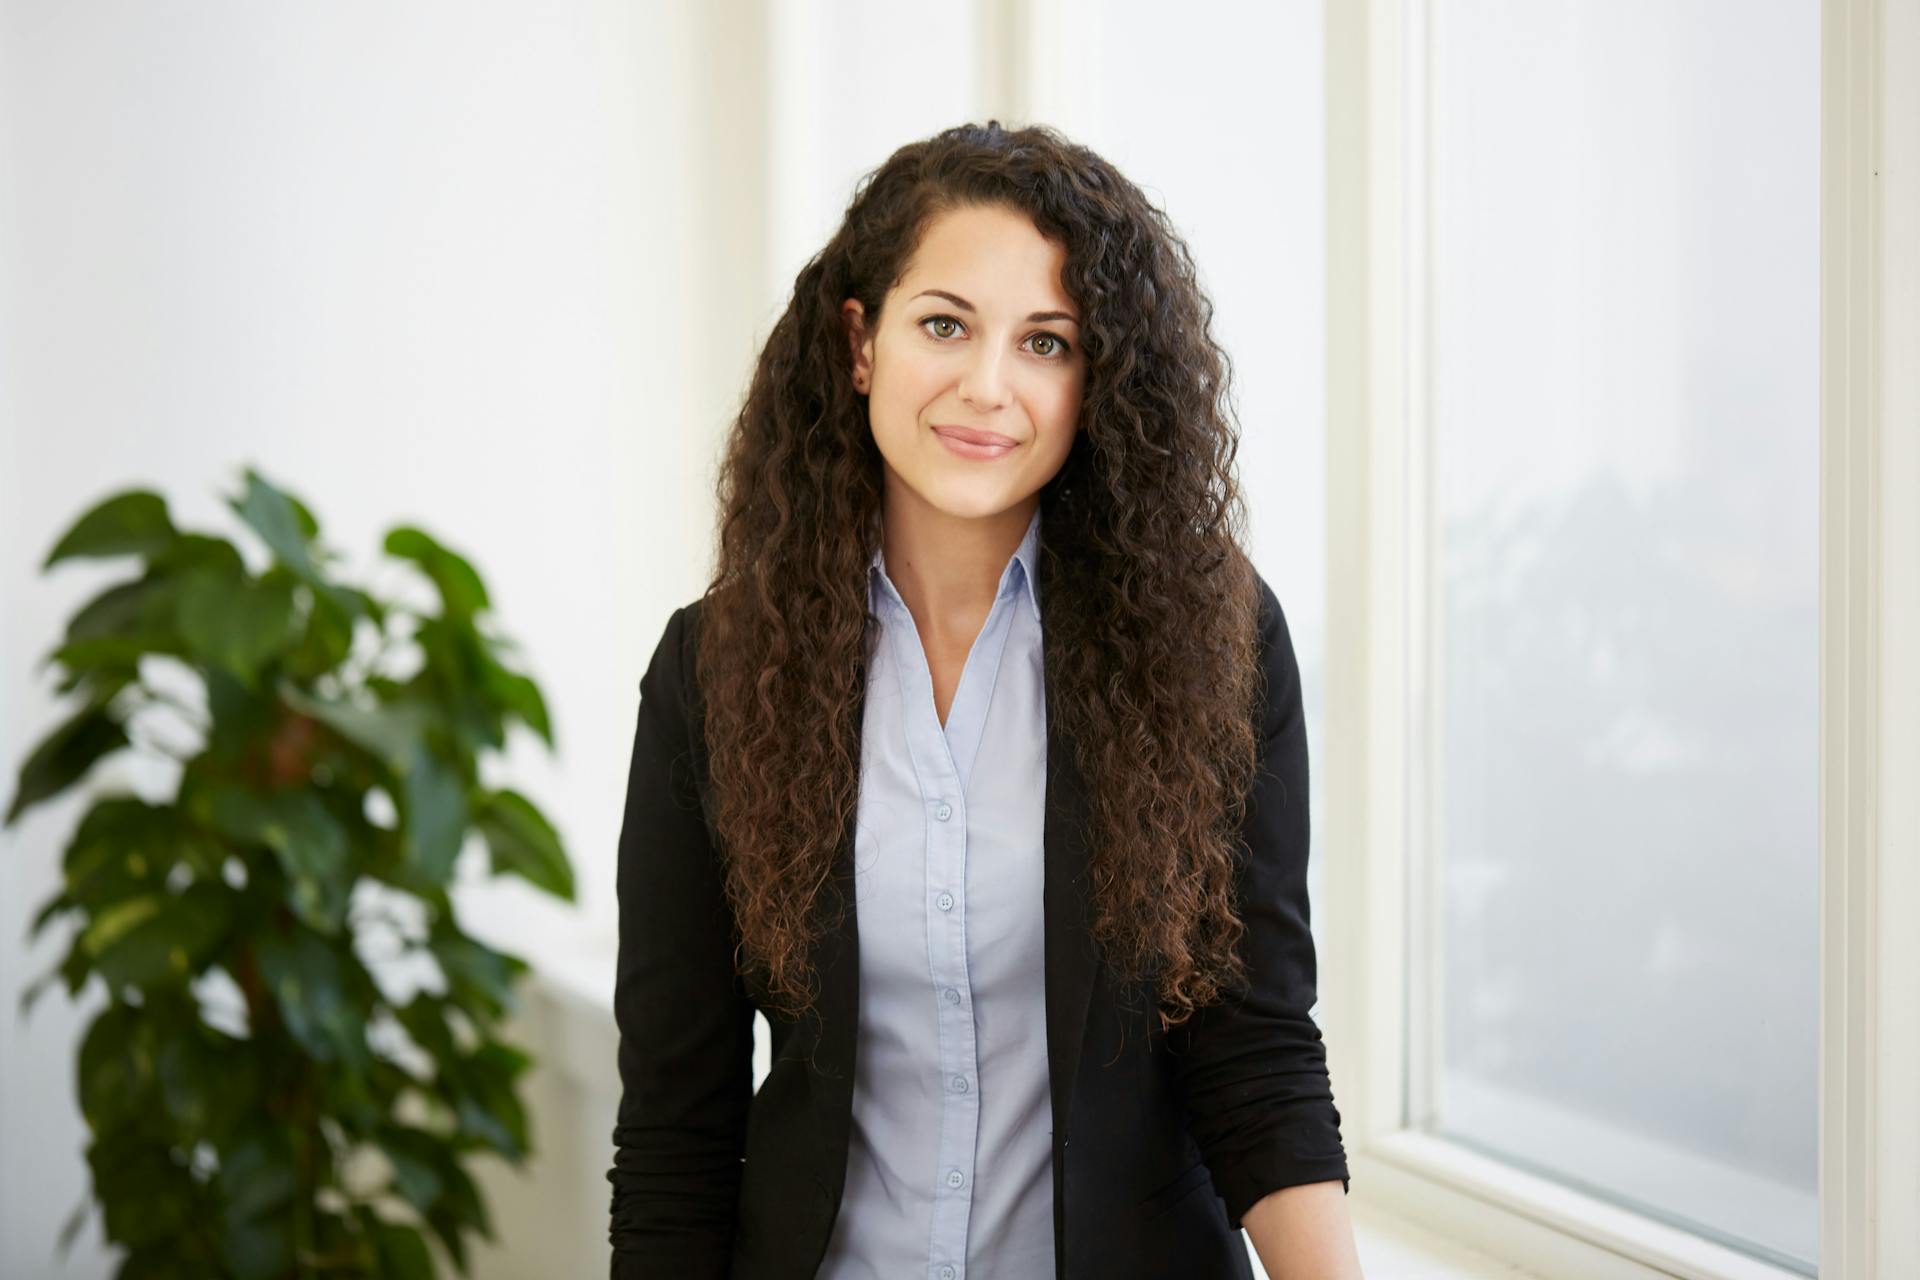 Leyla Farahmandnia strengthens the SVLAW team as an attorney